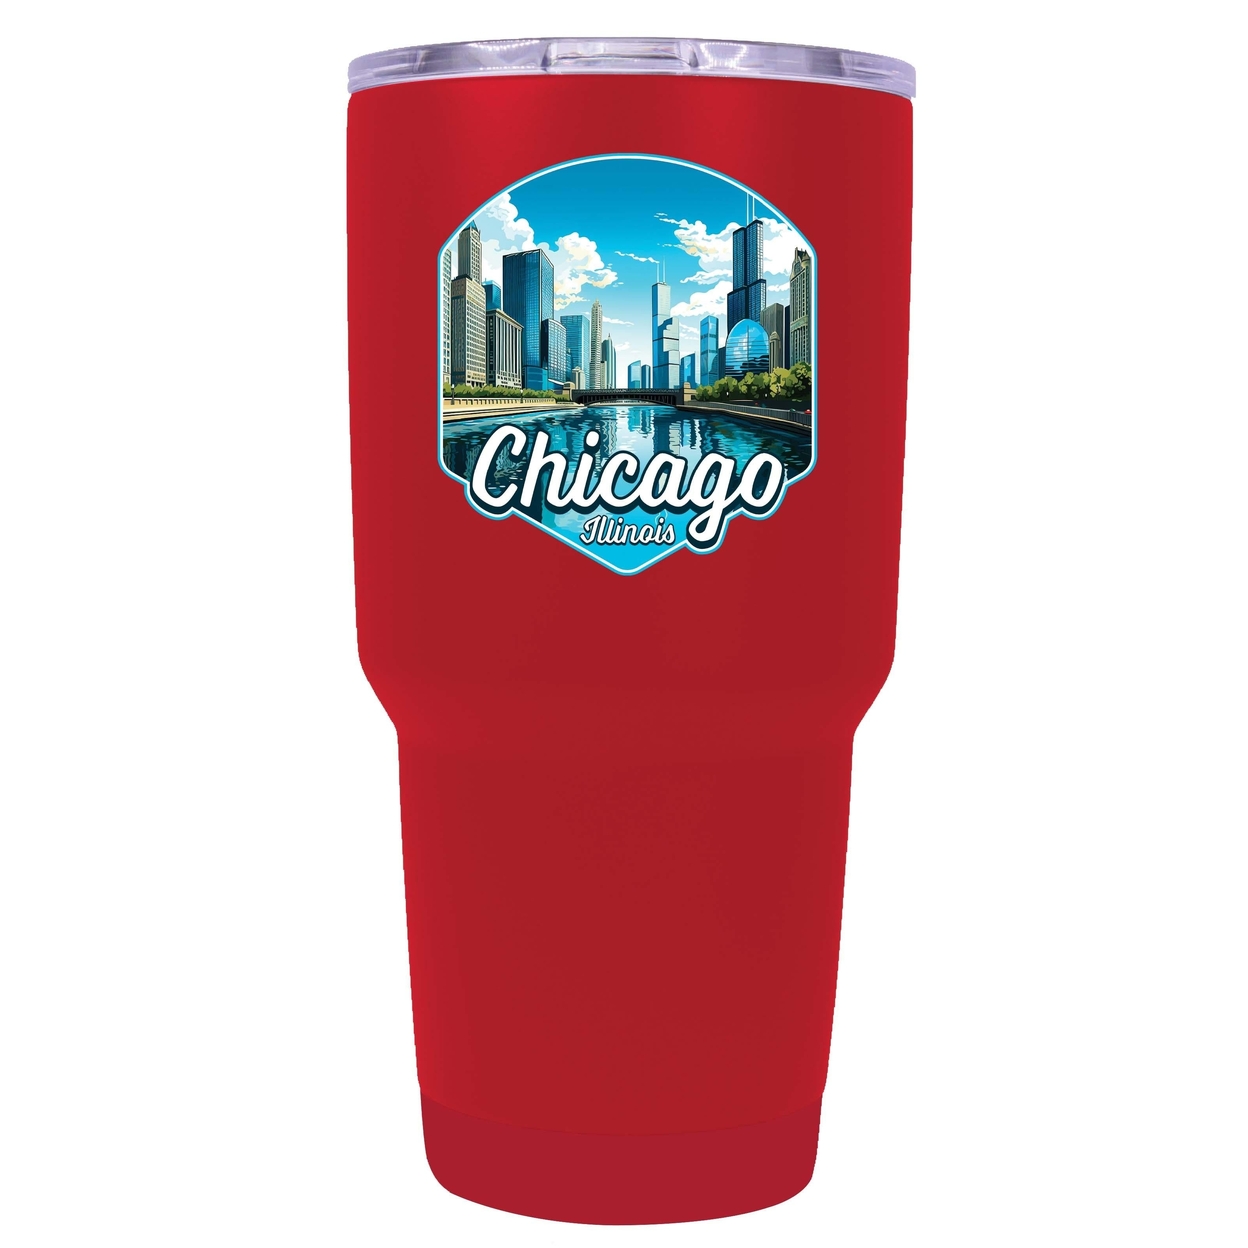 Chicago Illinois A Souvenir 24 Oz Insulated Tumbler - Red,,Single